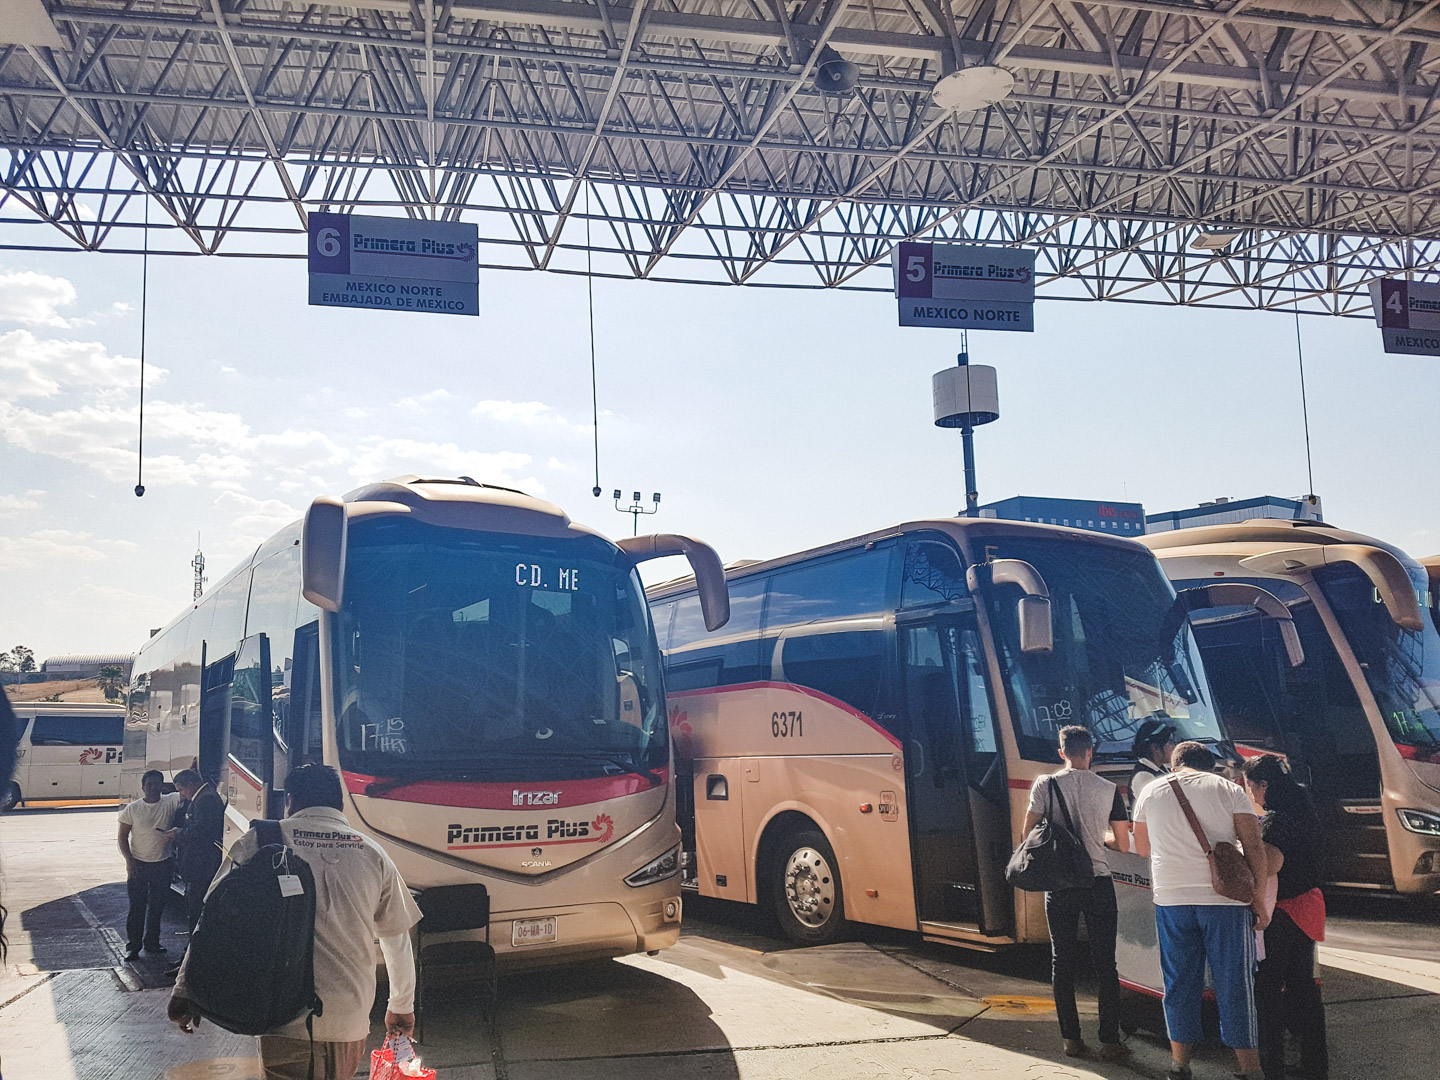 A guide to taking the Mexico City to Querétaro bus. The Primera Plus Querétaro bus is super convenient and comfortable!